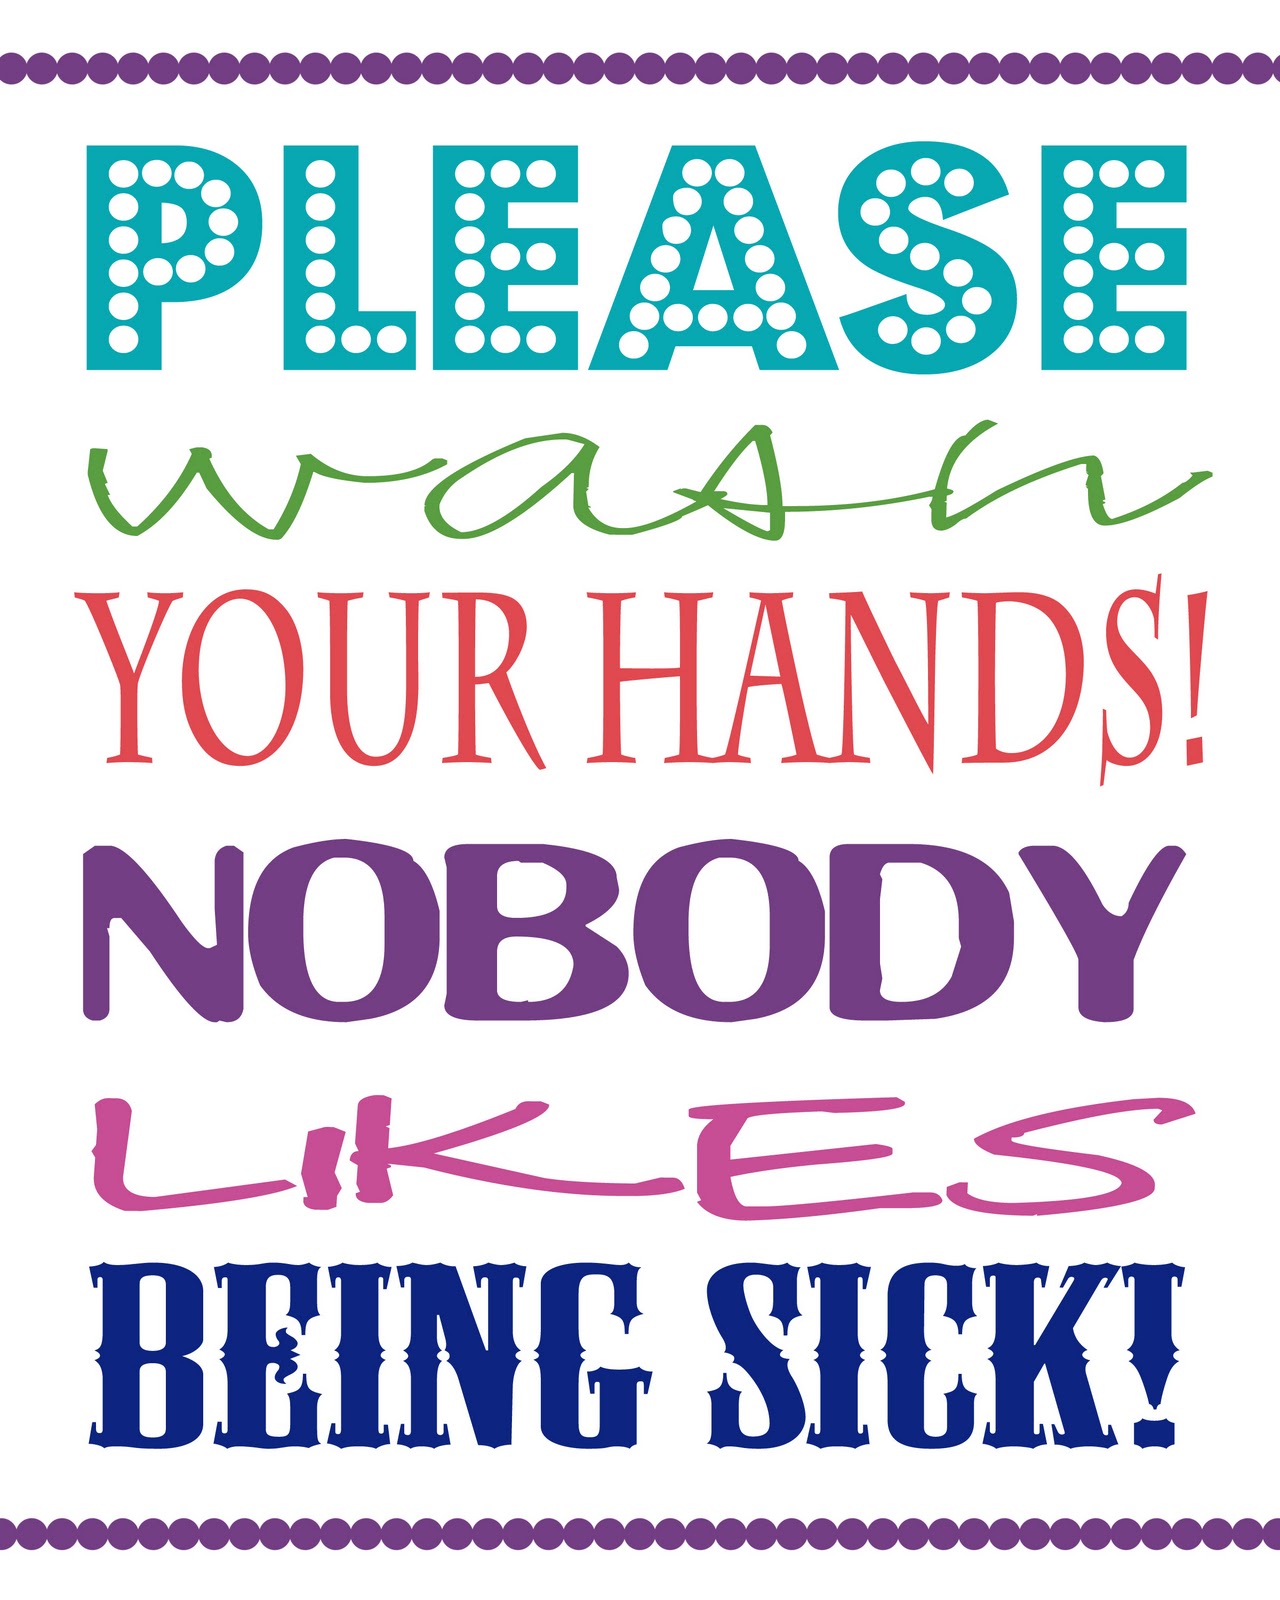 7-best-images-of-printable-restroom-signs-wash-hands-wash-your-hands